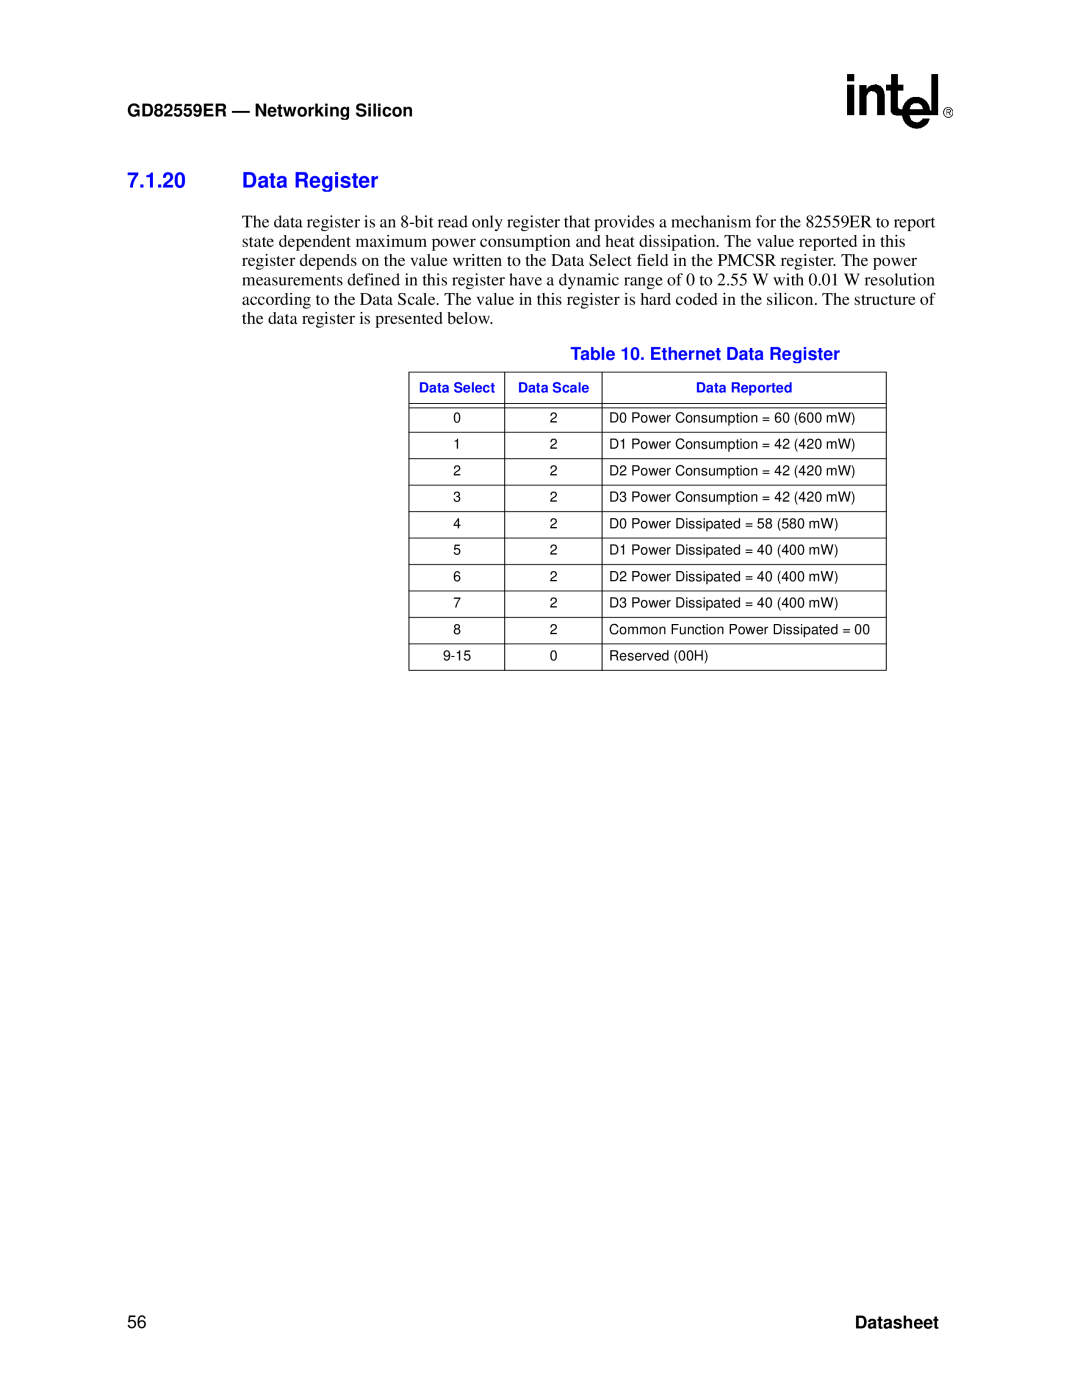 Intel manual Ethernet Data Register, GD82559ER - Networkin g Silicon, Datasheet 